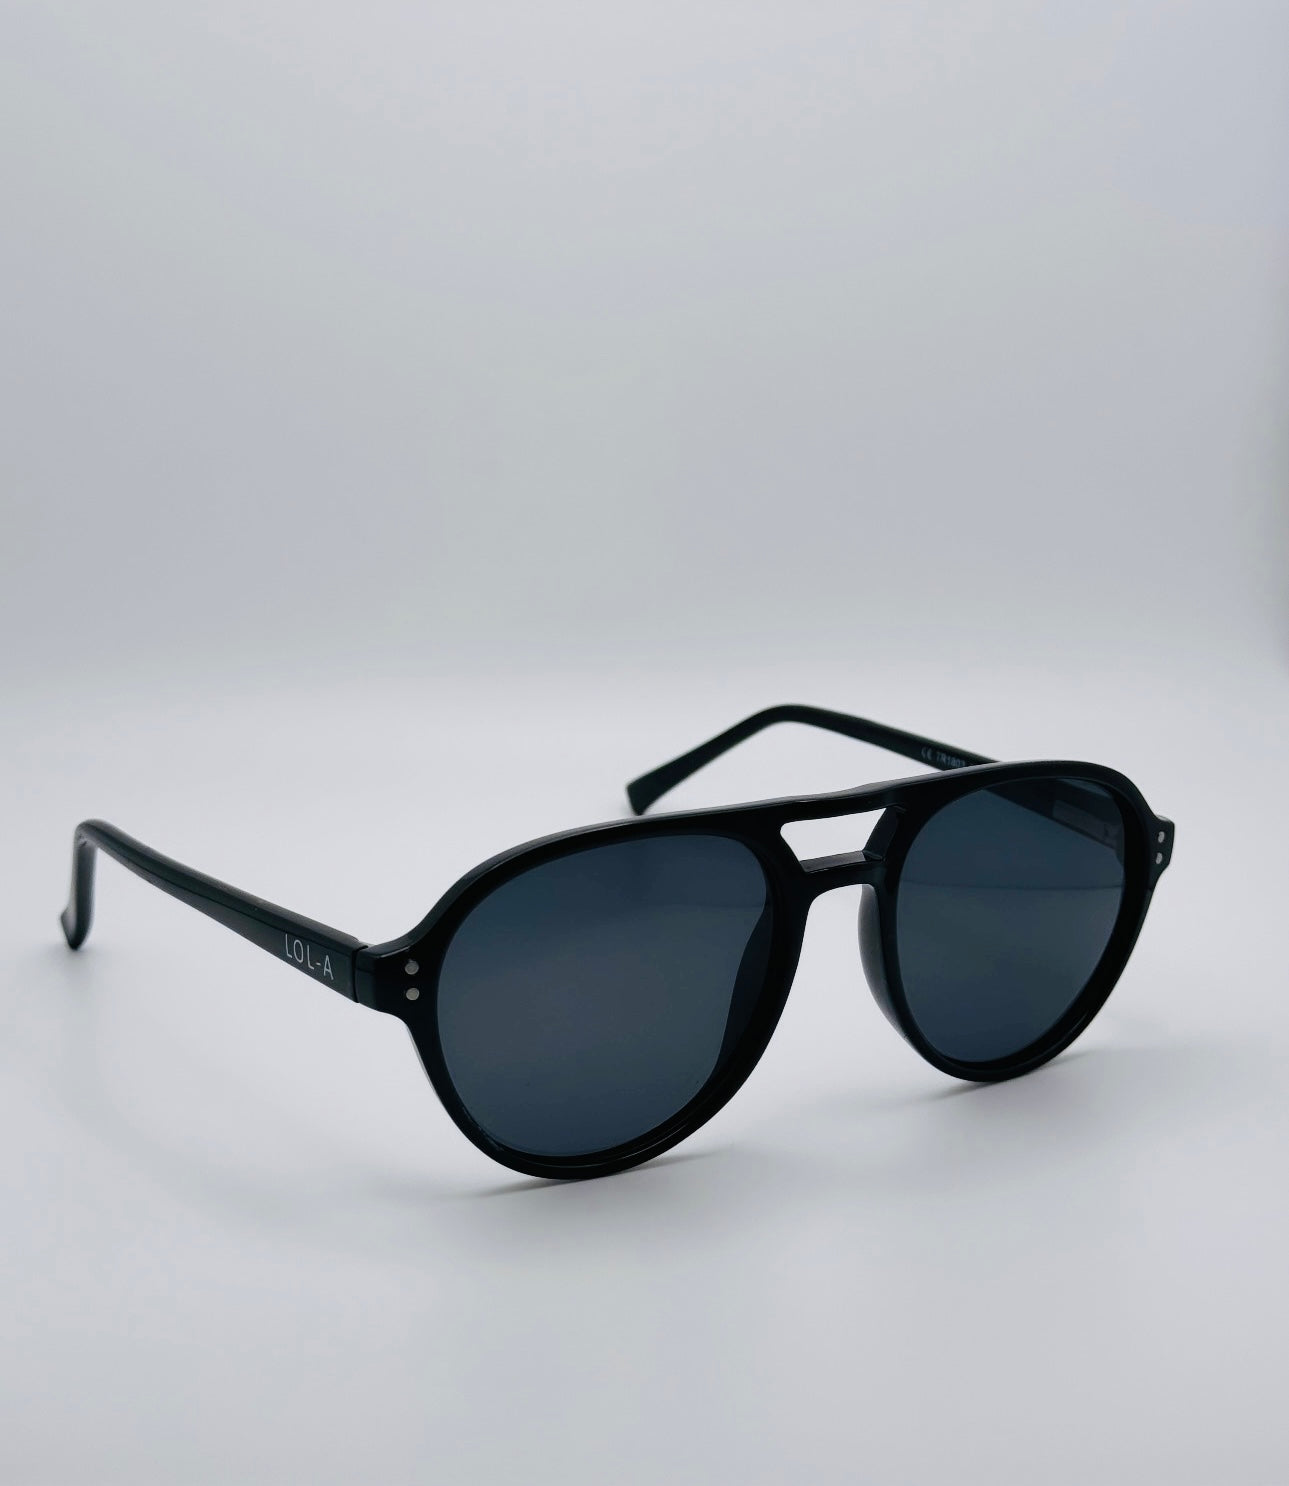 "BLACK WIDOW" Sunglasses